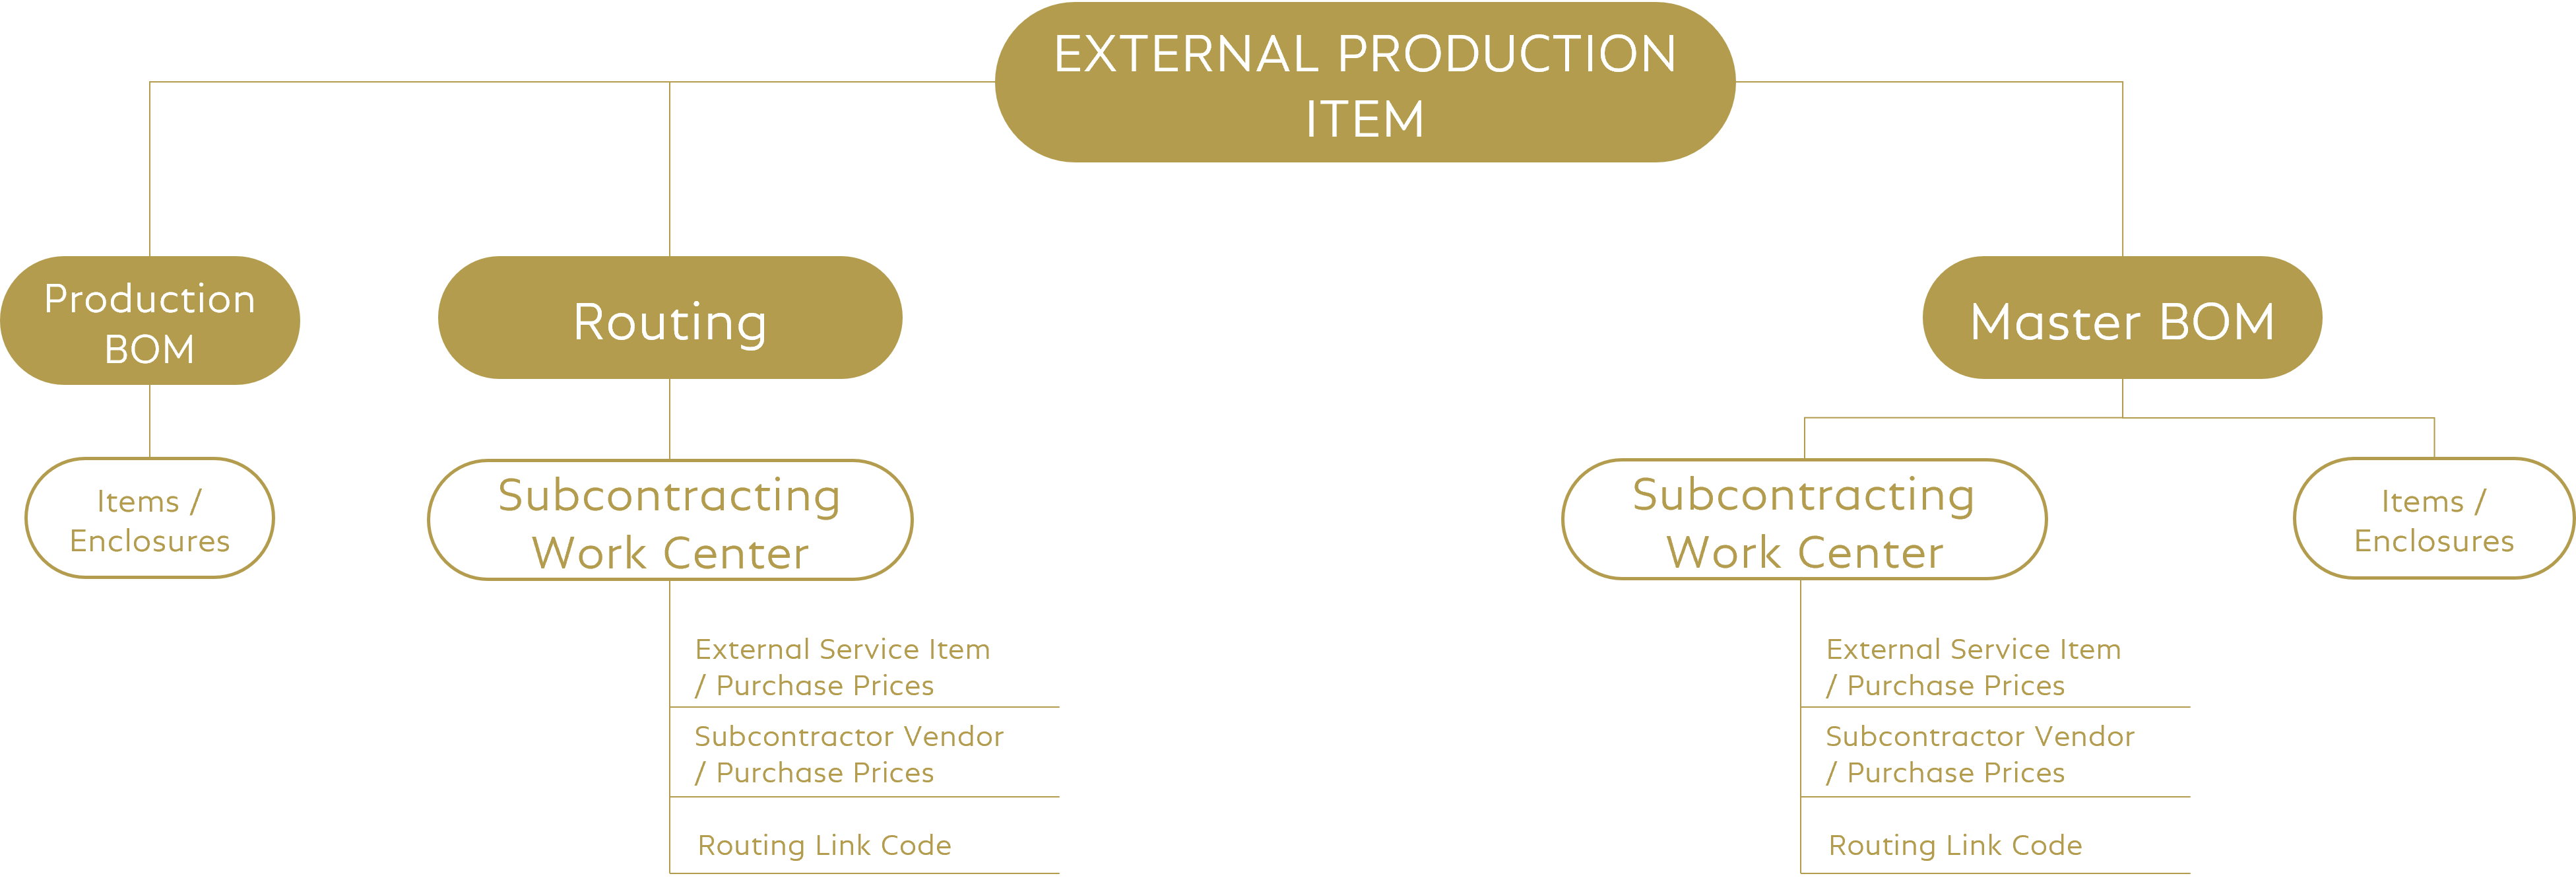 General Setup of External Production